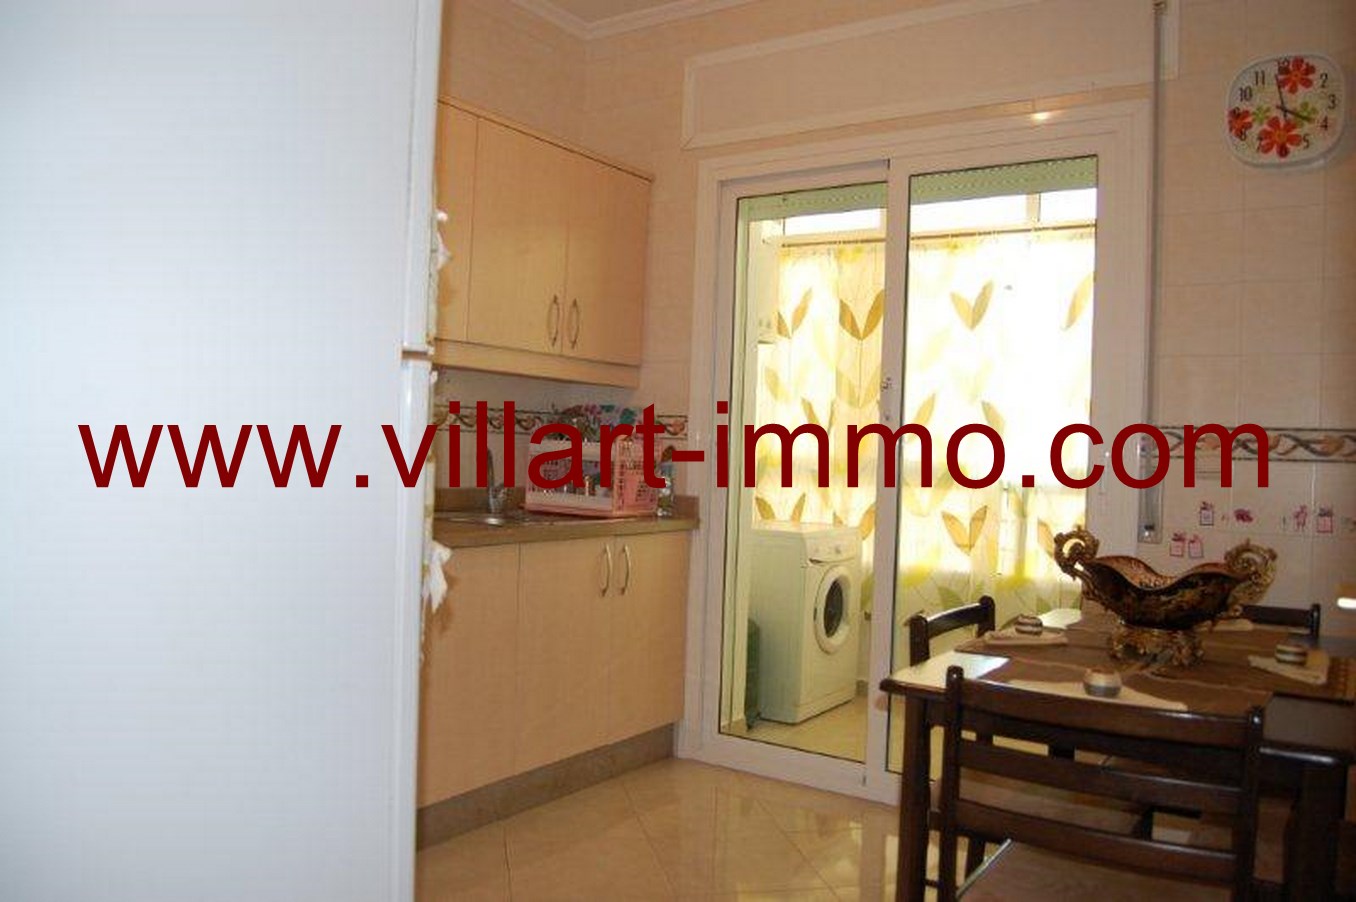 5-location-appartement-meuble-tanger-cuisine-l654-villart-immo